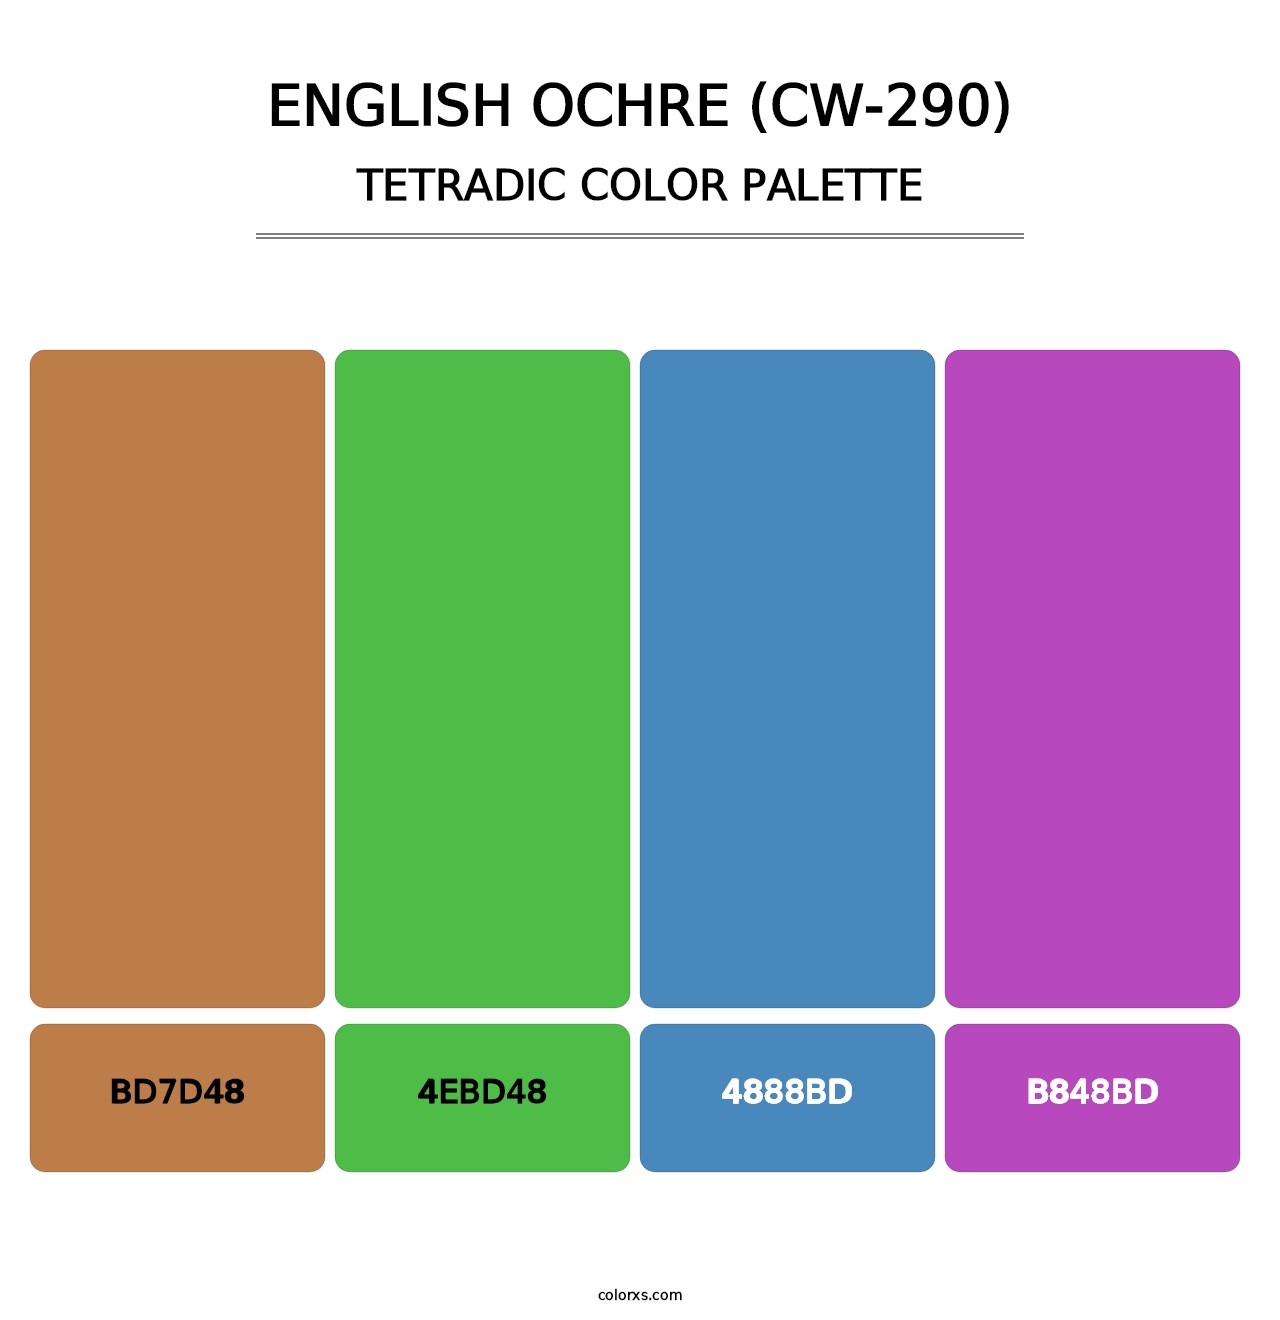 English Ochre (CW-290) - Tetradic Color Palette